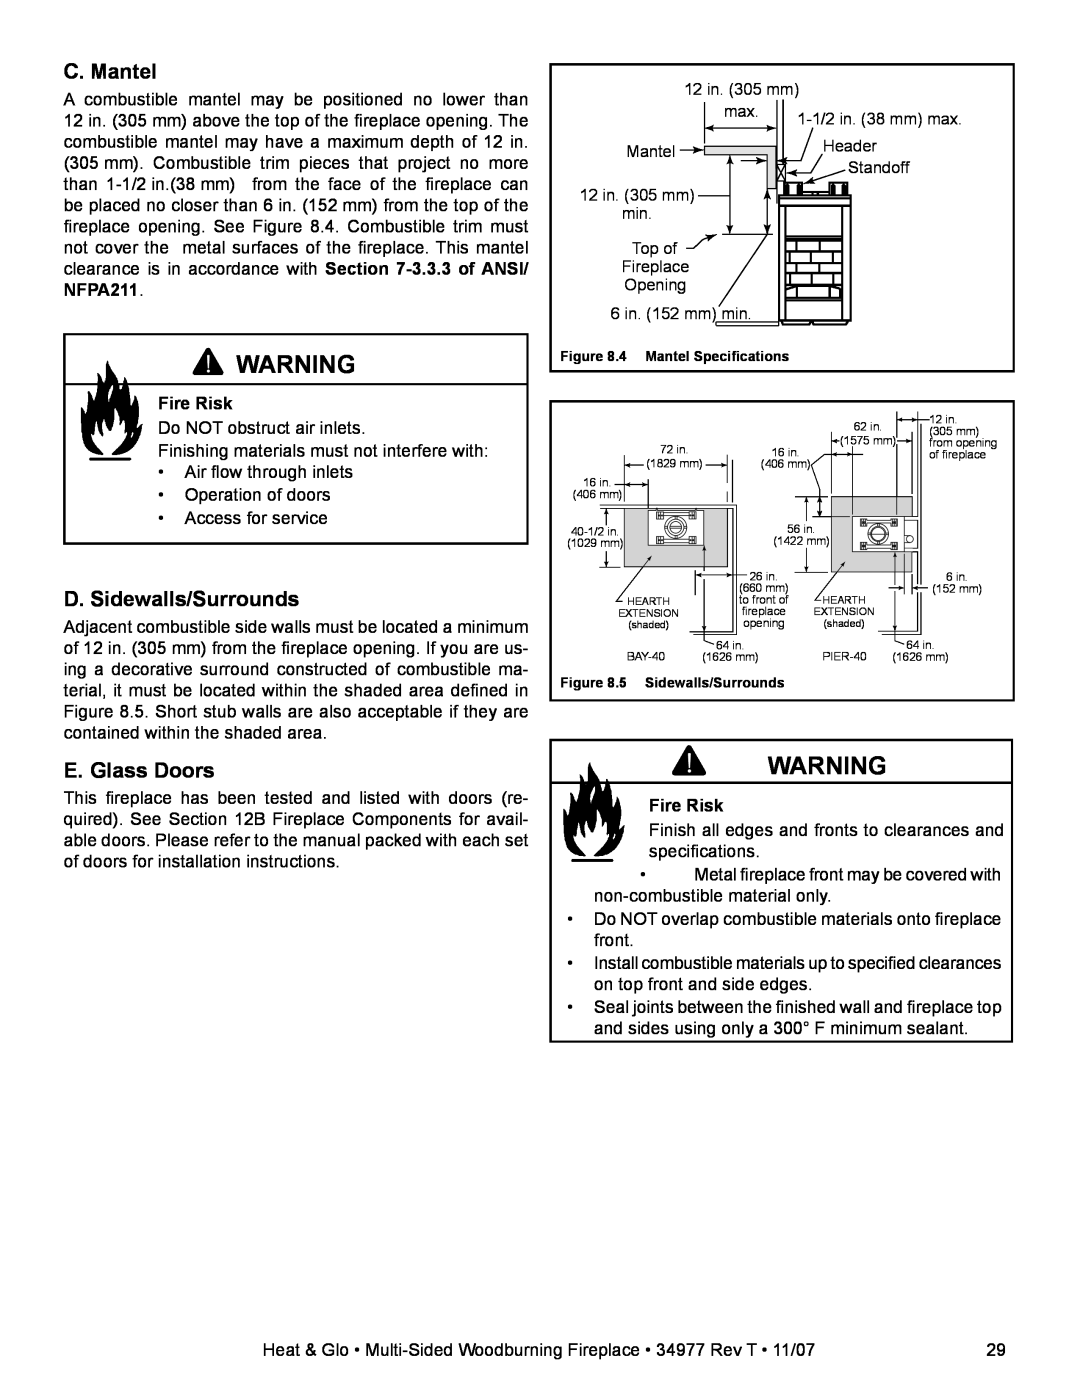 Heat & Glo LifeStyle BAY-40 owner manual C. Mantel, D. Sidewalls/Surrounds, E. Glass Doors, Fire Risk 